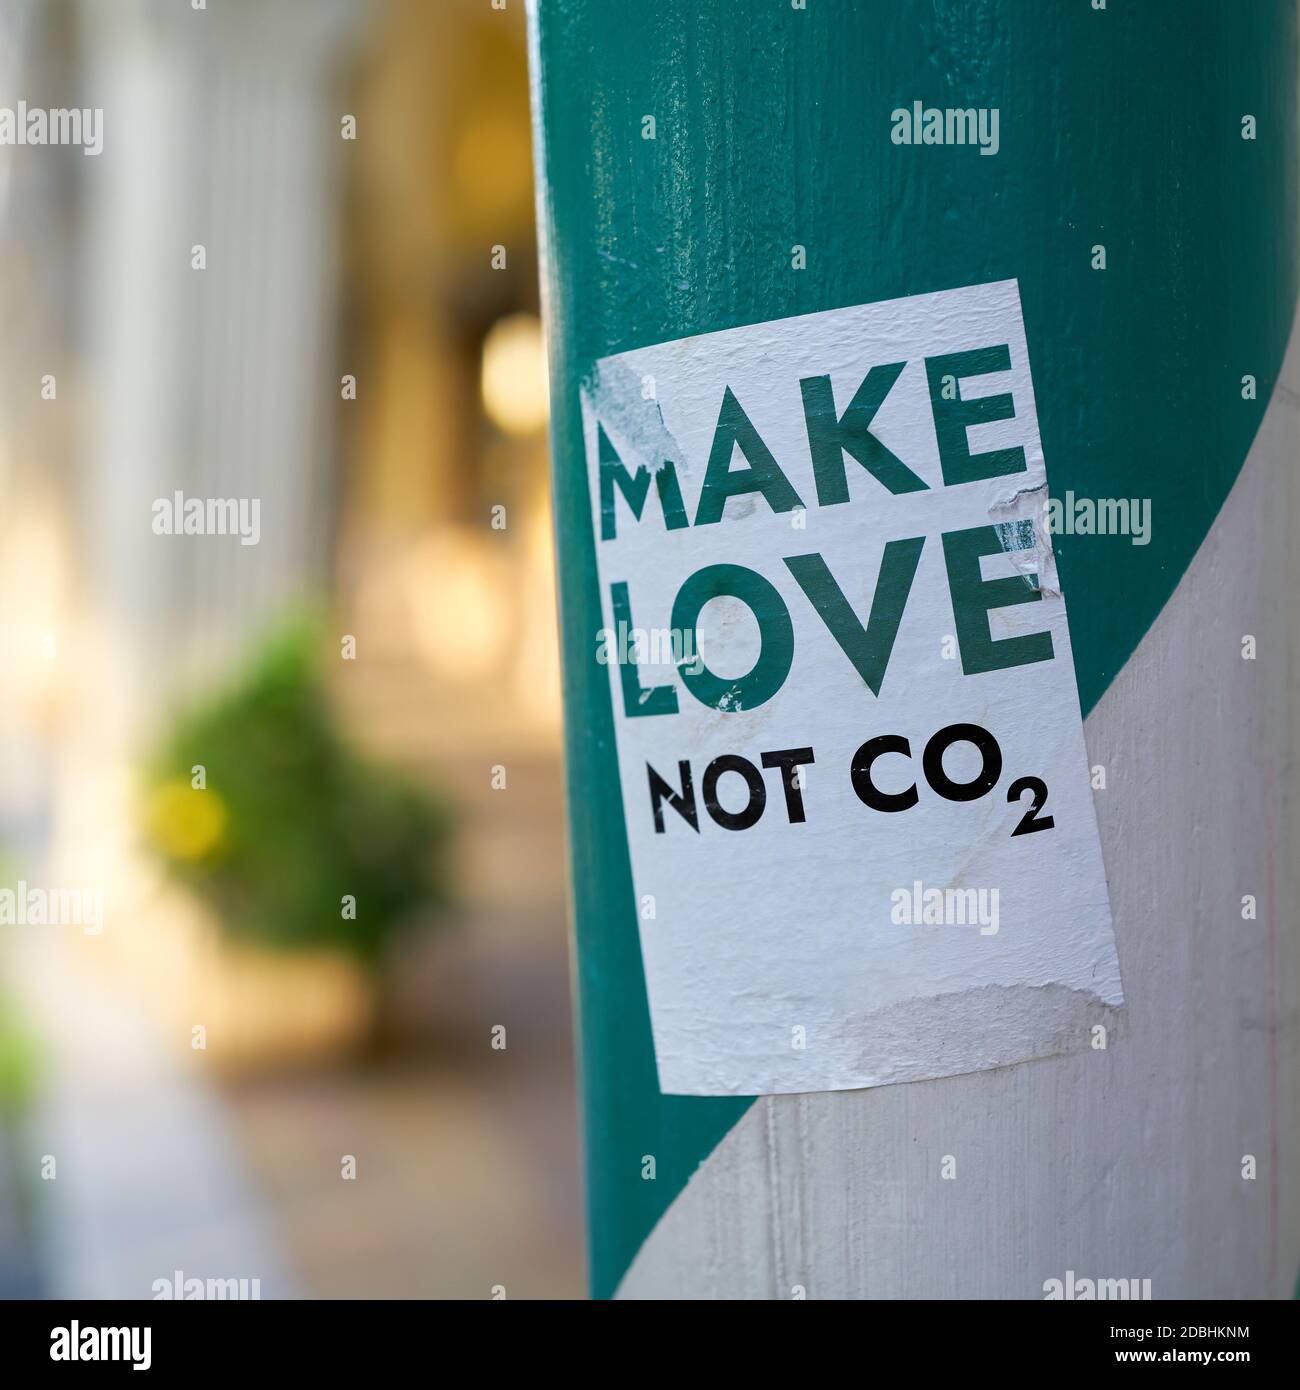 make love not co2 Stock Photo